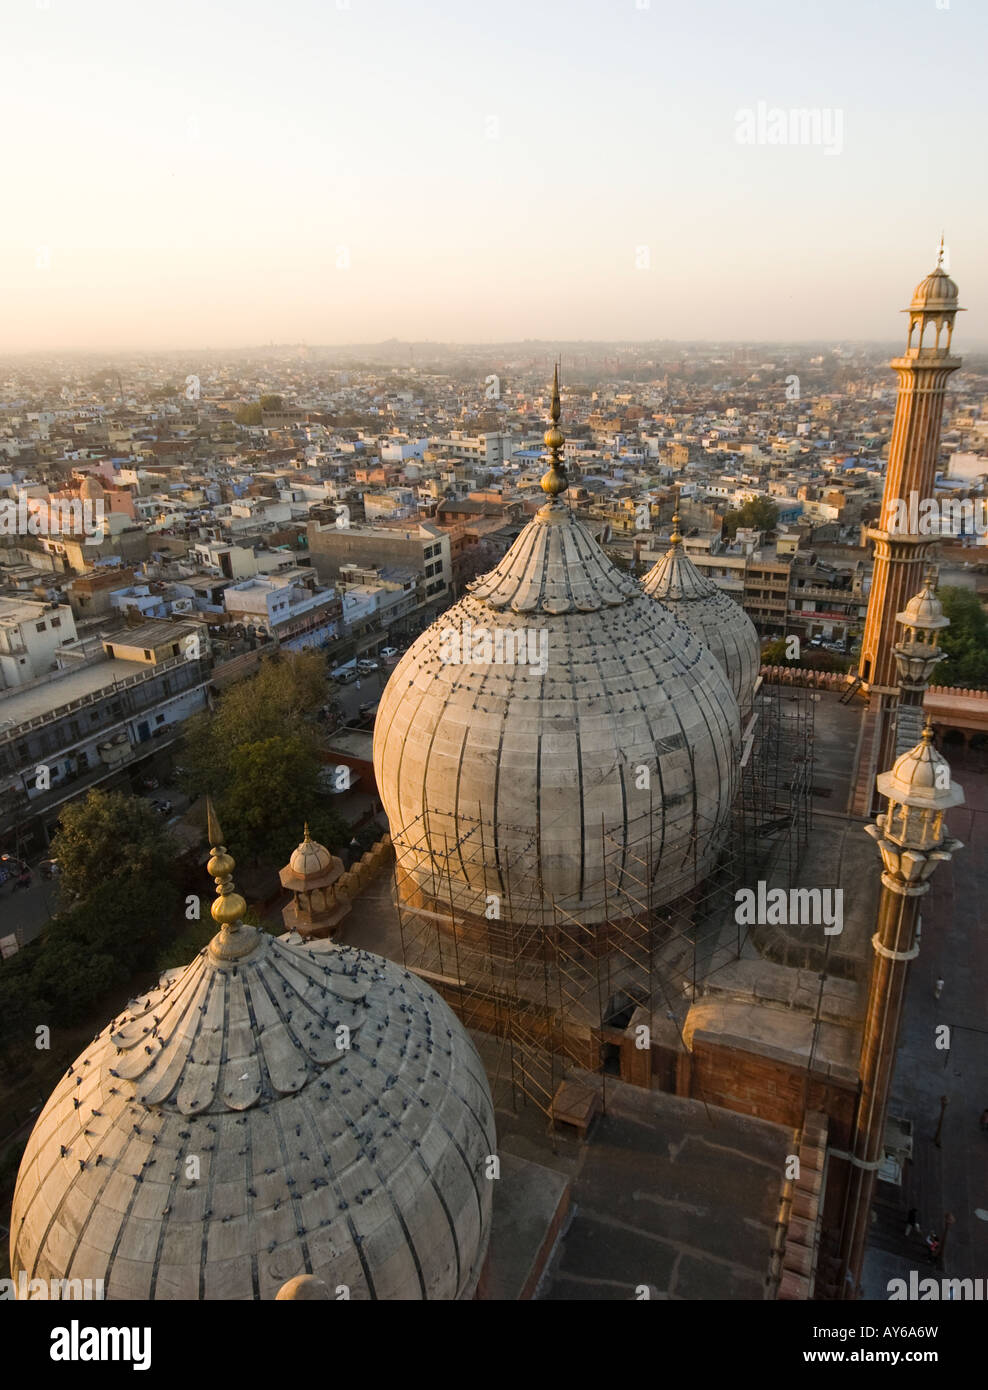 Une vue de Delhi à partir d'un minaret de la mosquée Jama Masjid à Delhi en Inde Banque D'Images